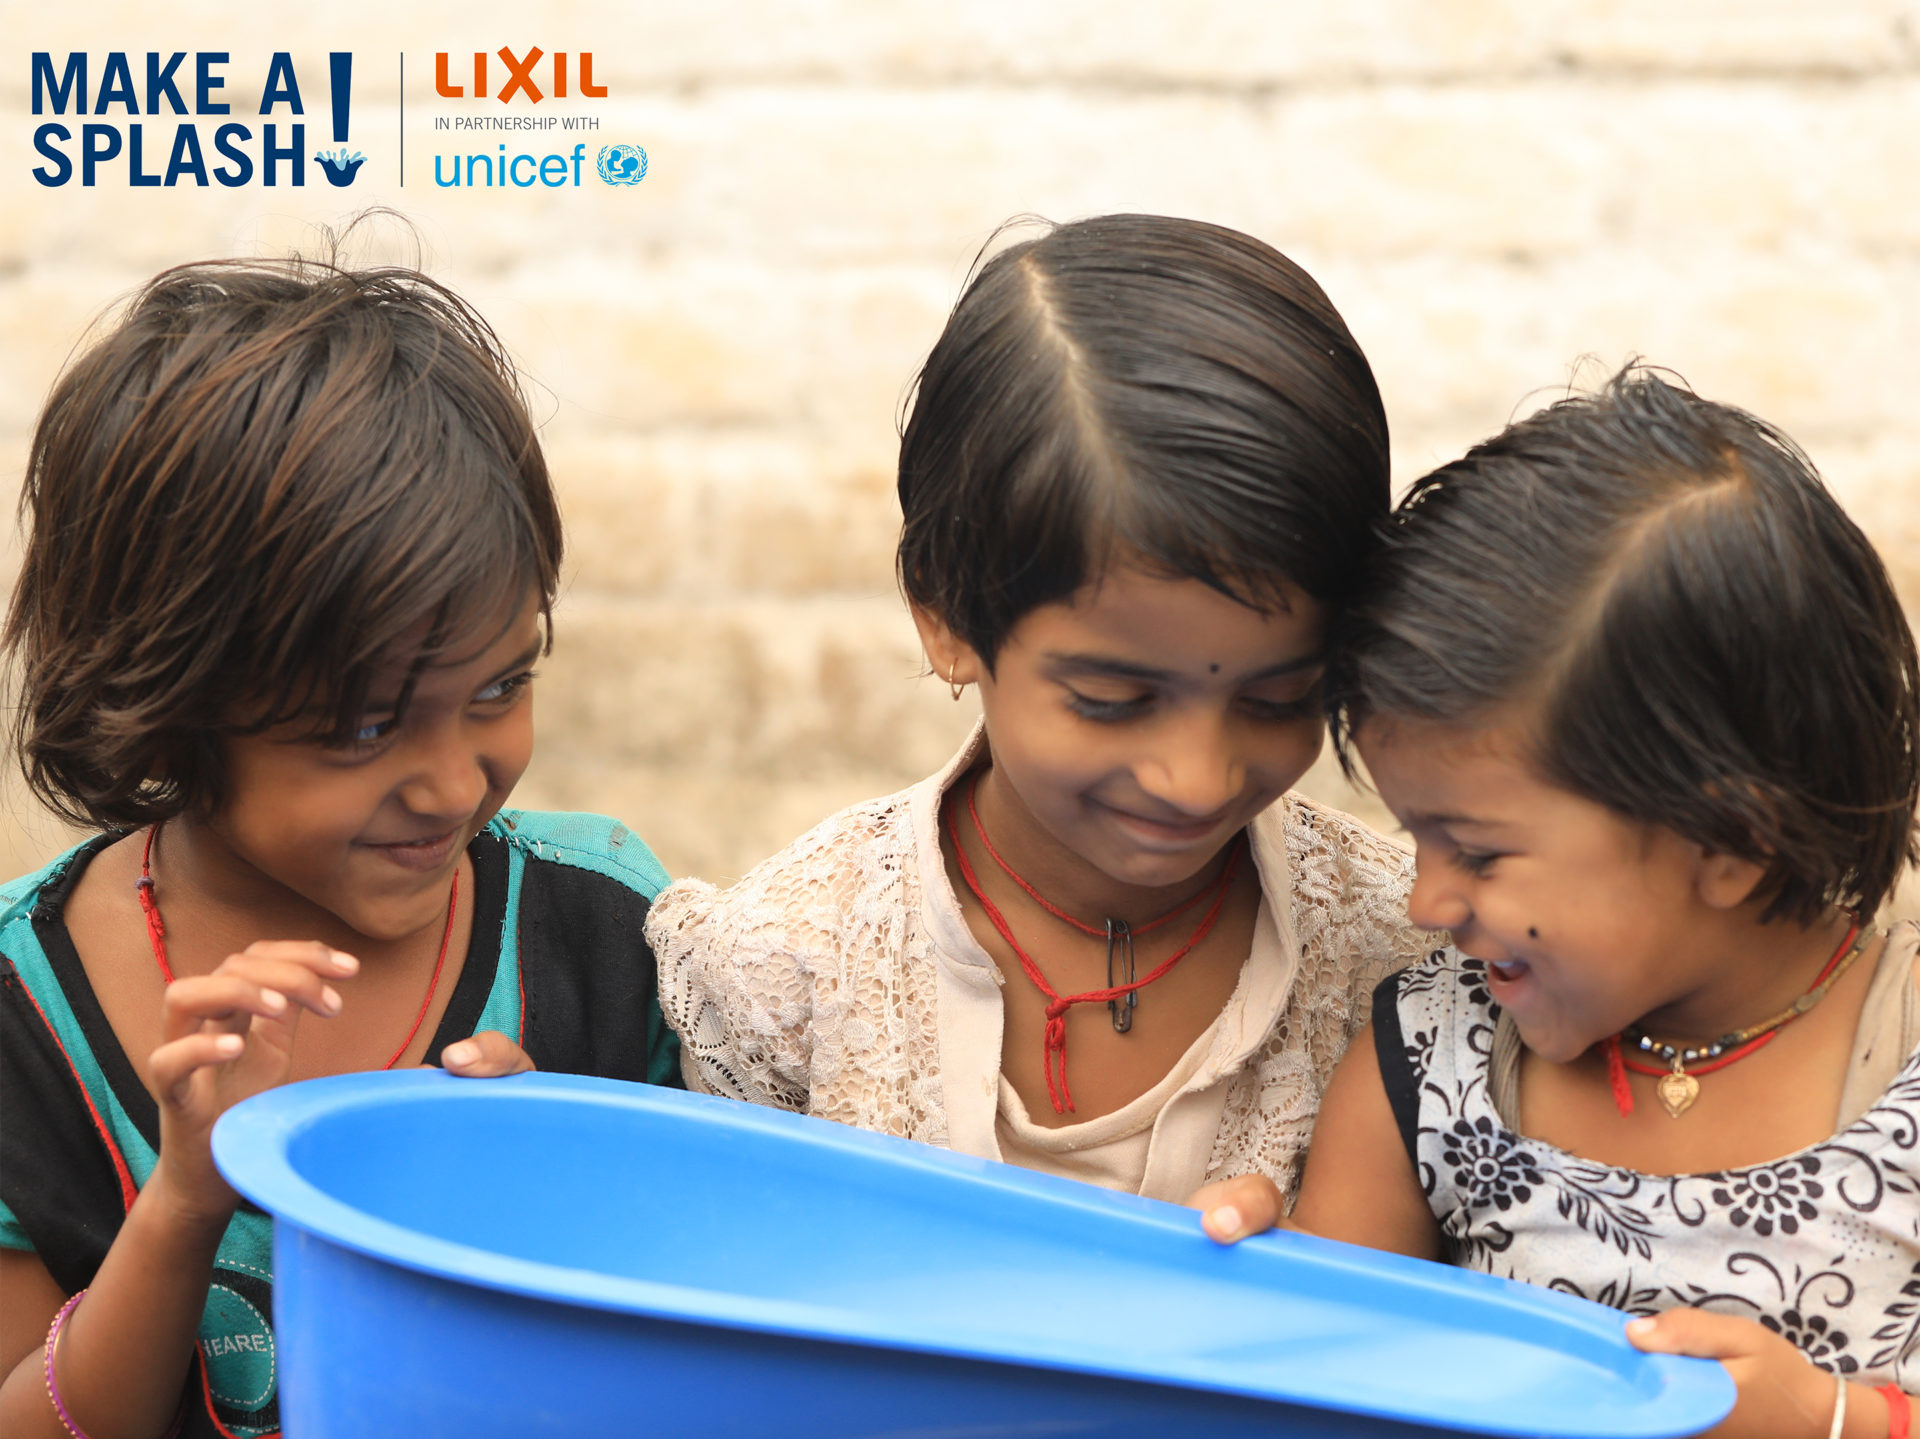 GROHE apoia parceria LIXIL e UNICEF – “Make a Splash!”